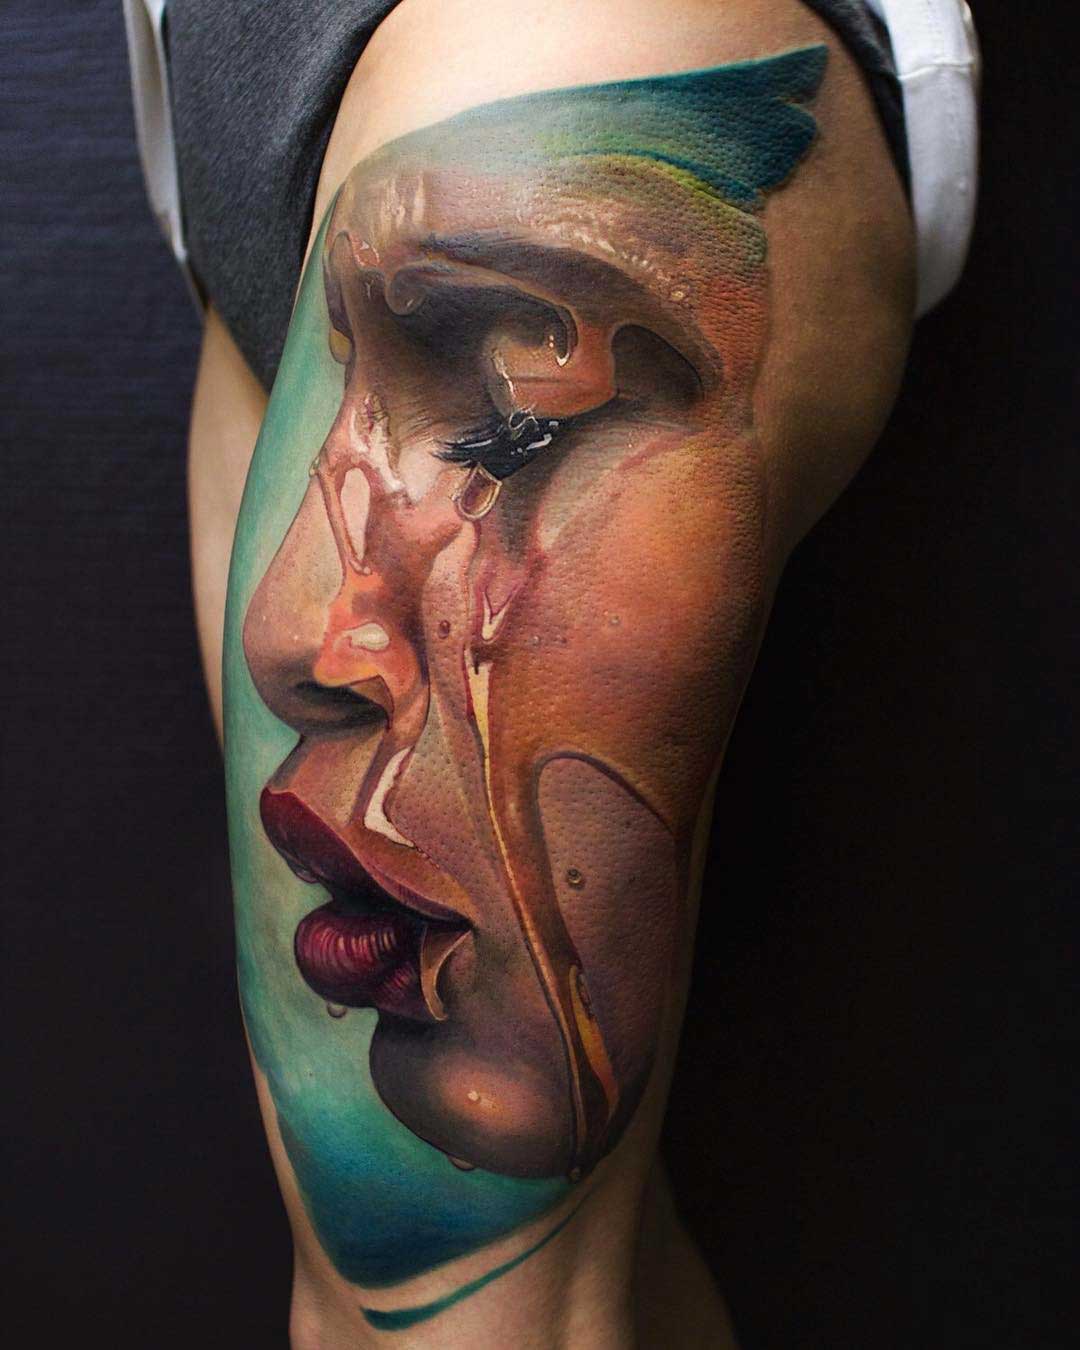 Water Flood Face Tattoo on Thigh - Best Tattoo Ideas Gallery